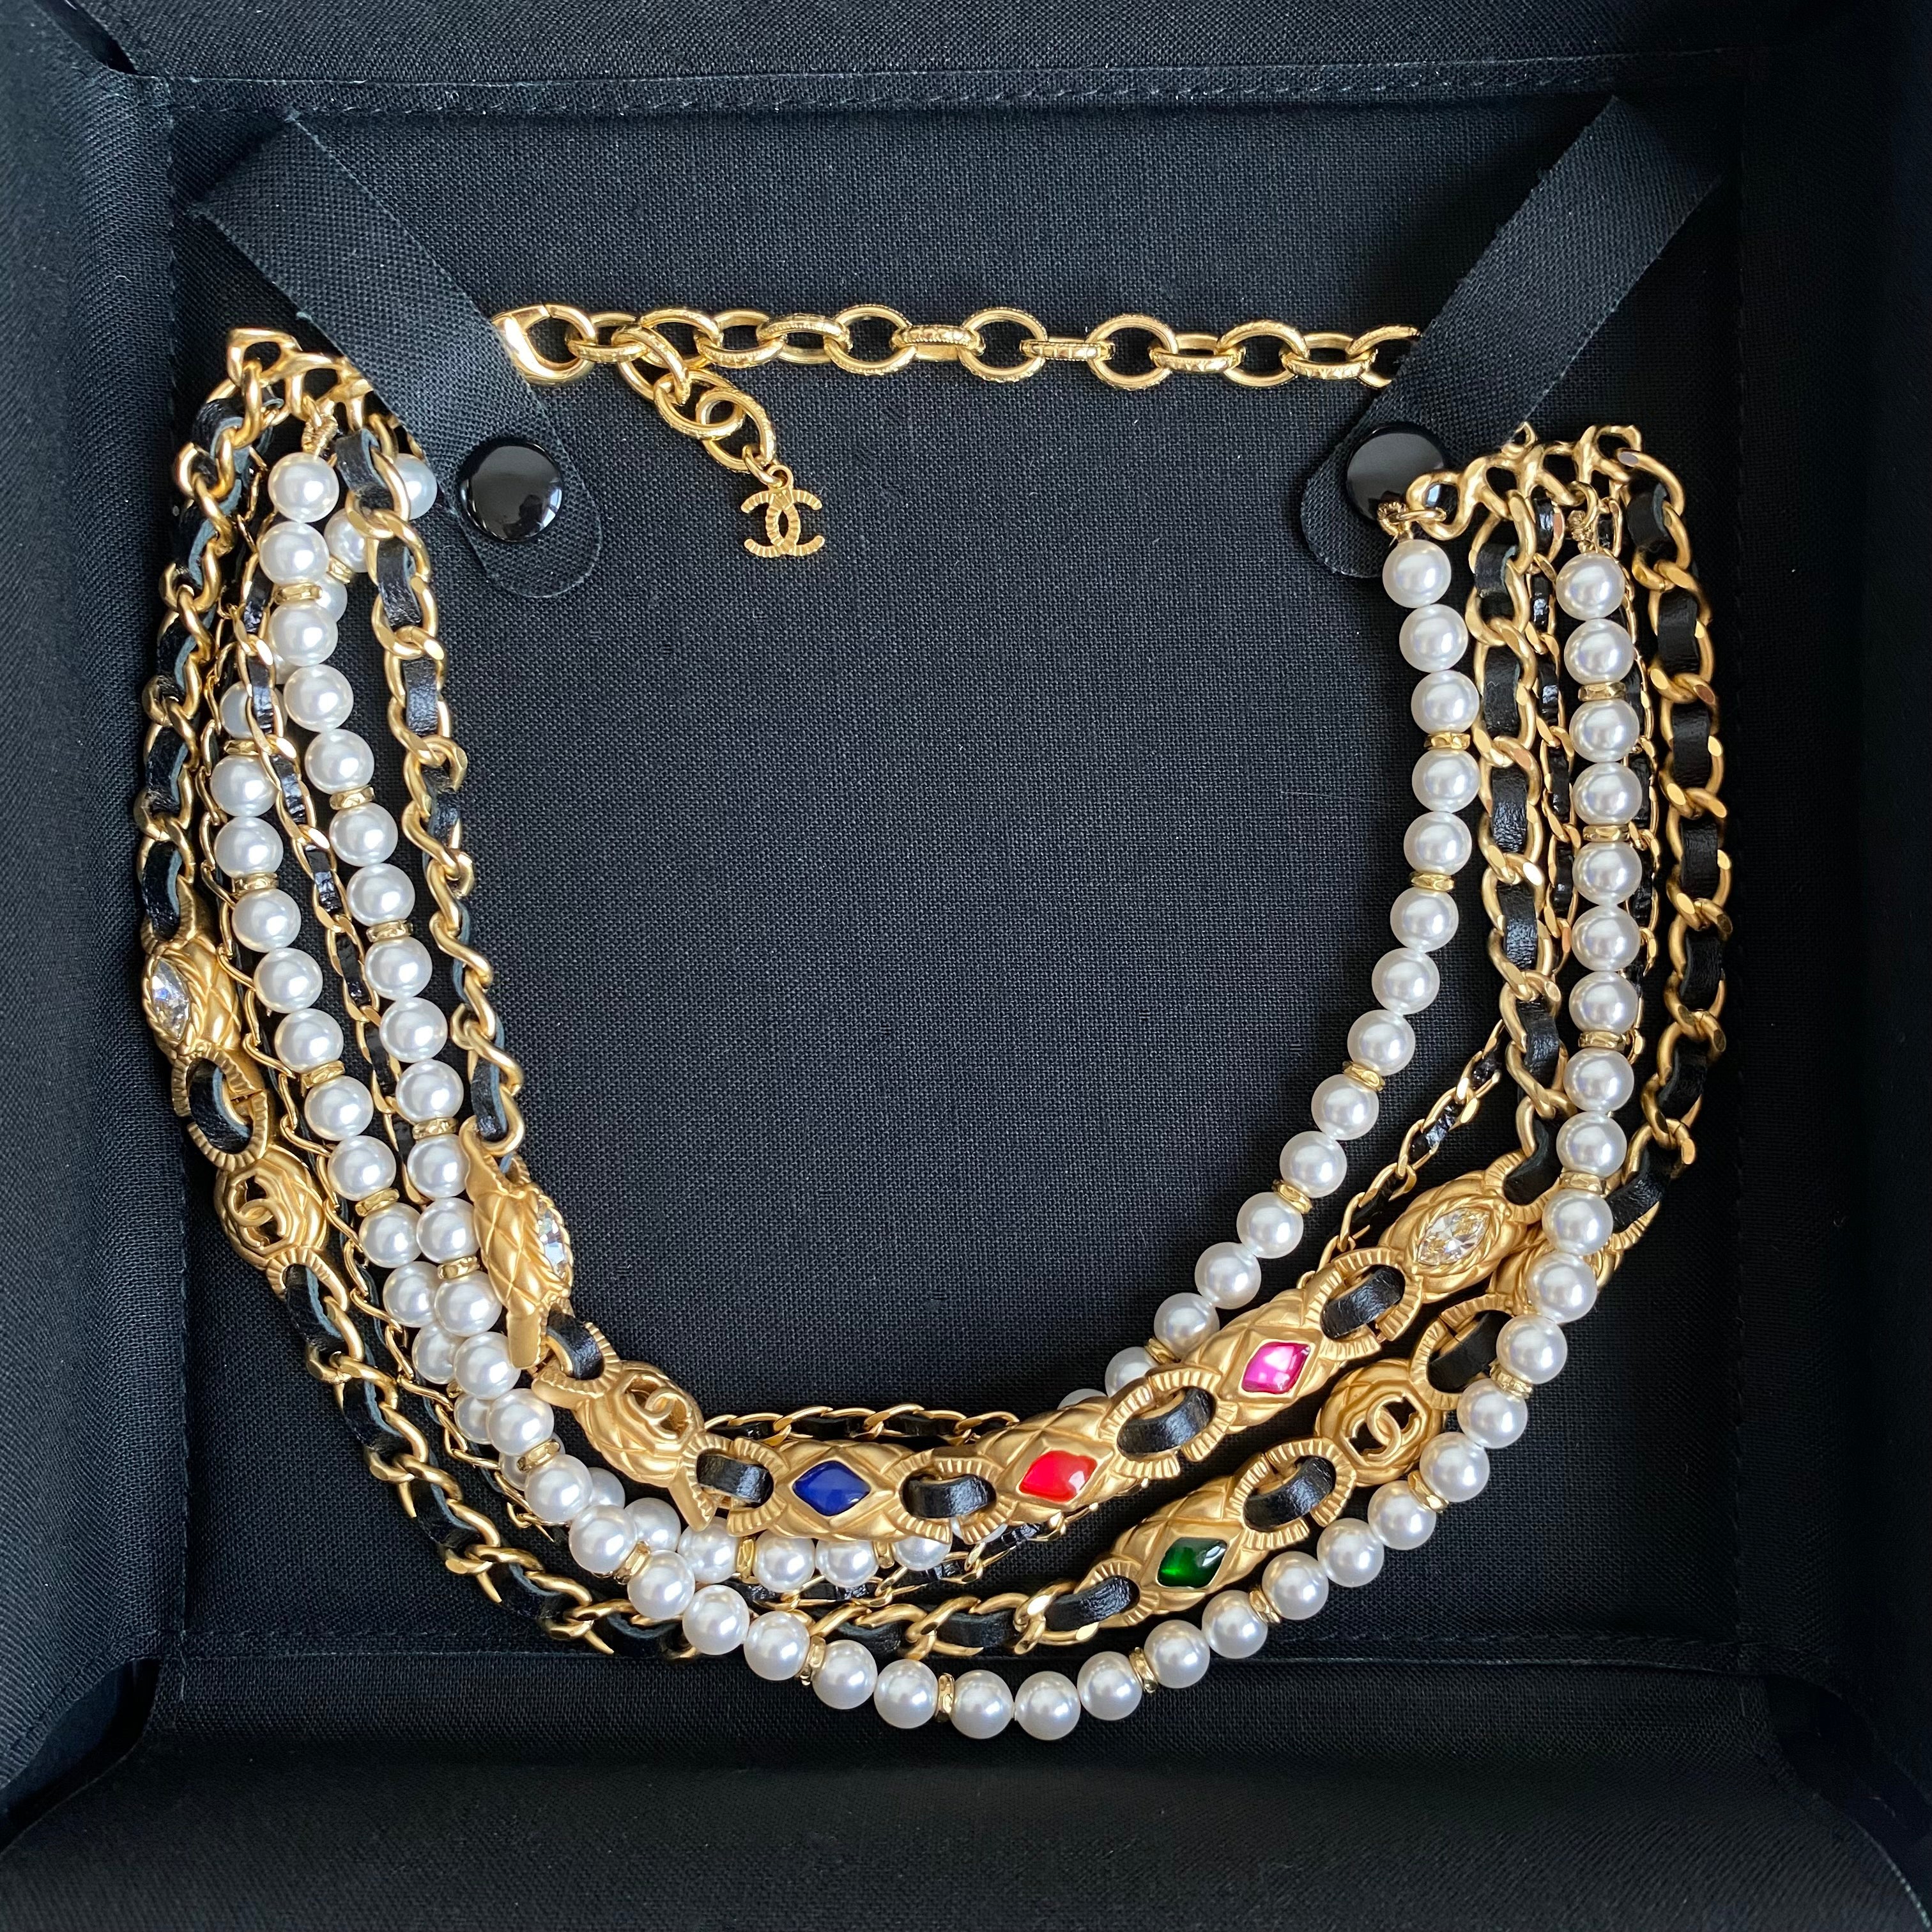 chanel jewelry